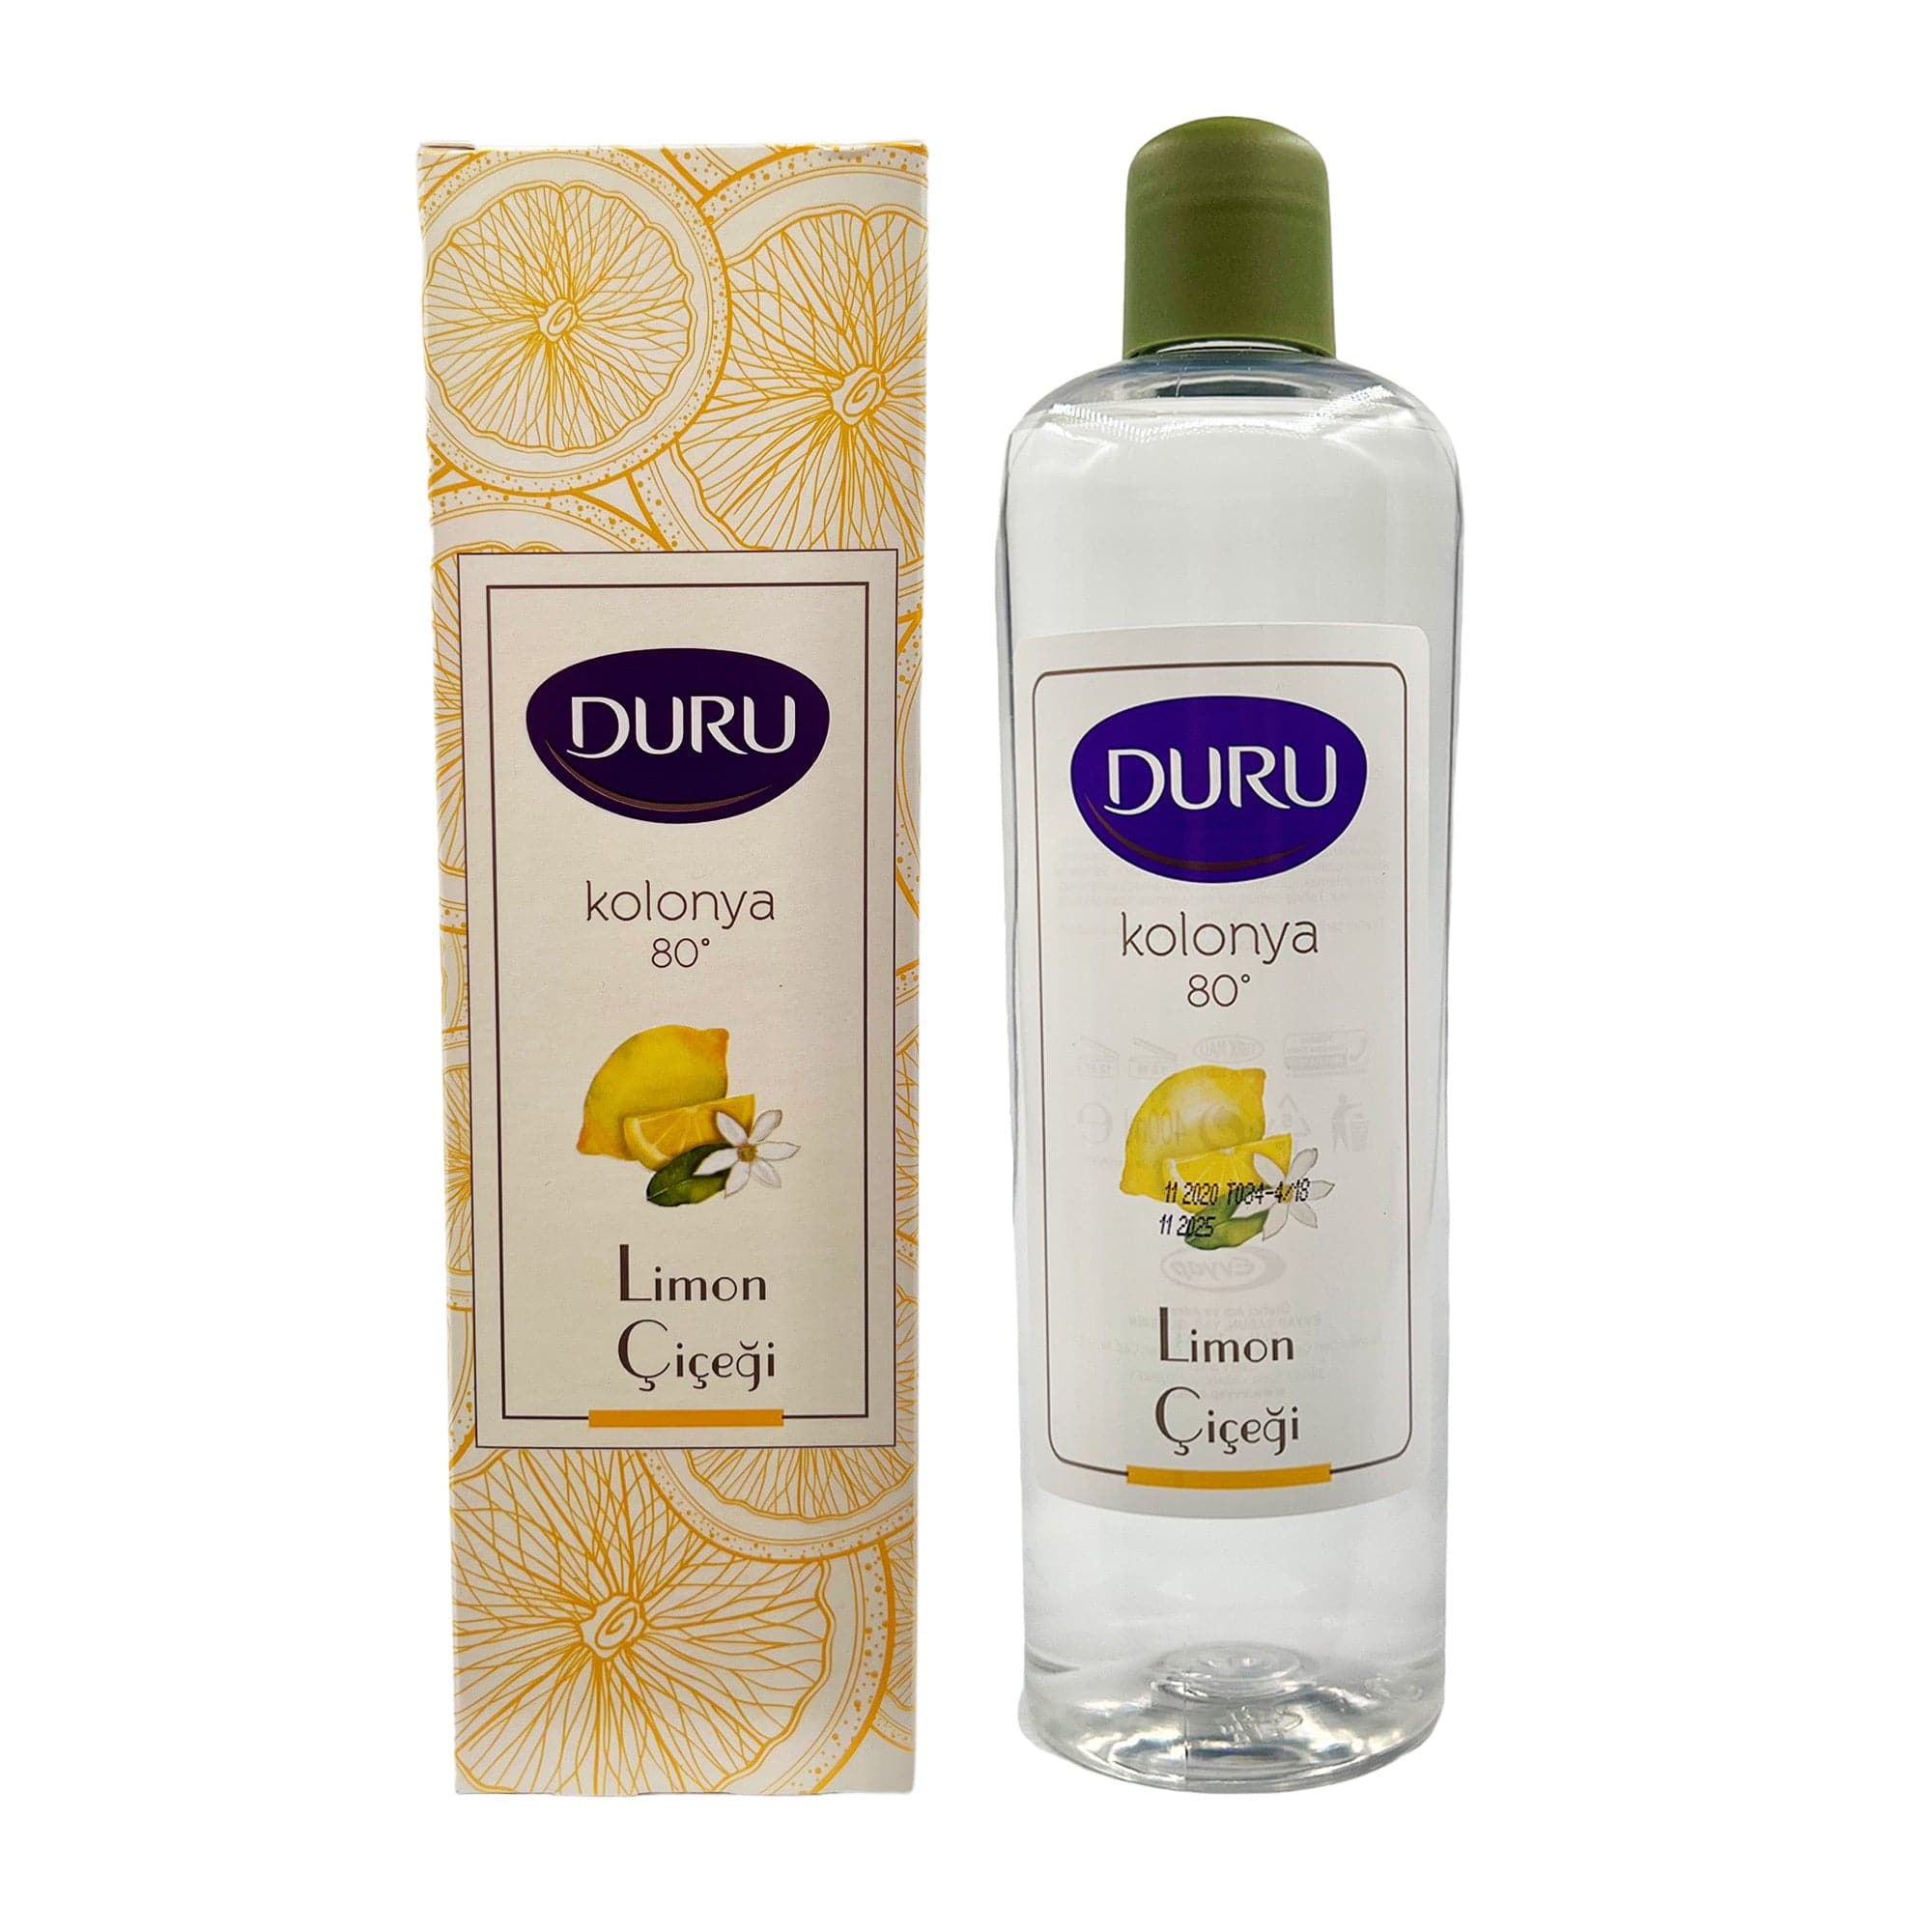 Duru - Lemon Cologne Traditional Turkish Cologne Aftershave Citrus 400ml - Eson Direct